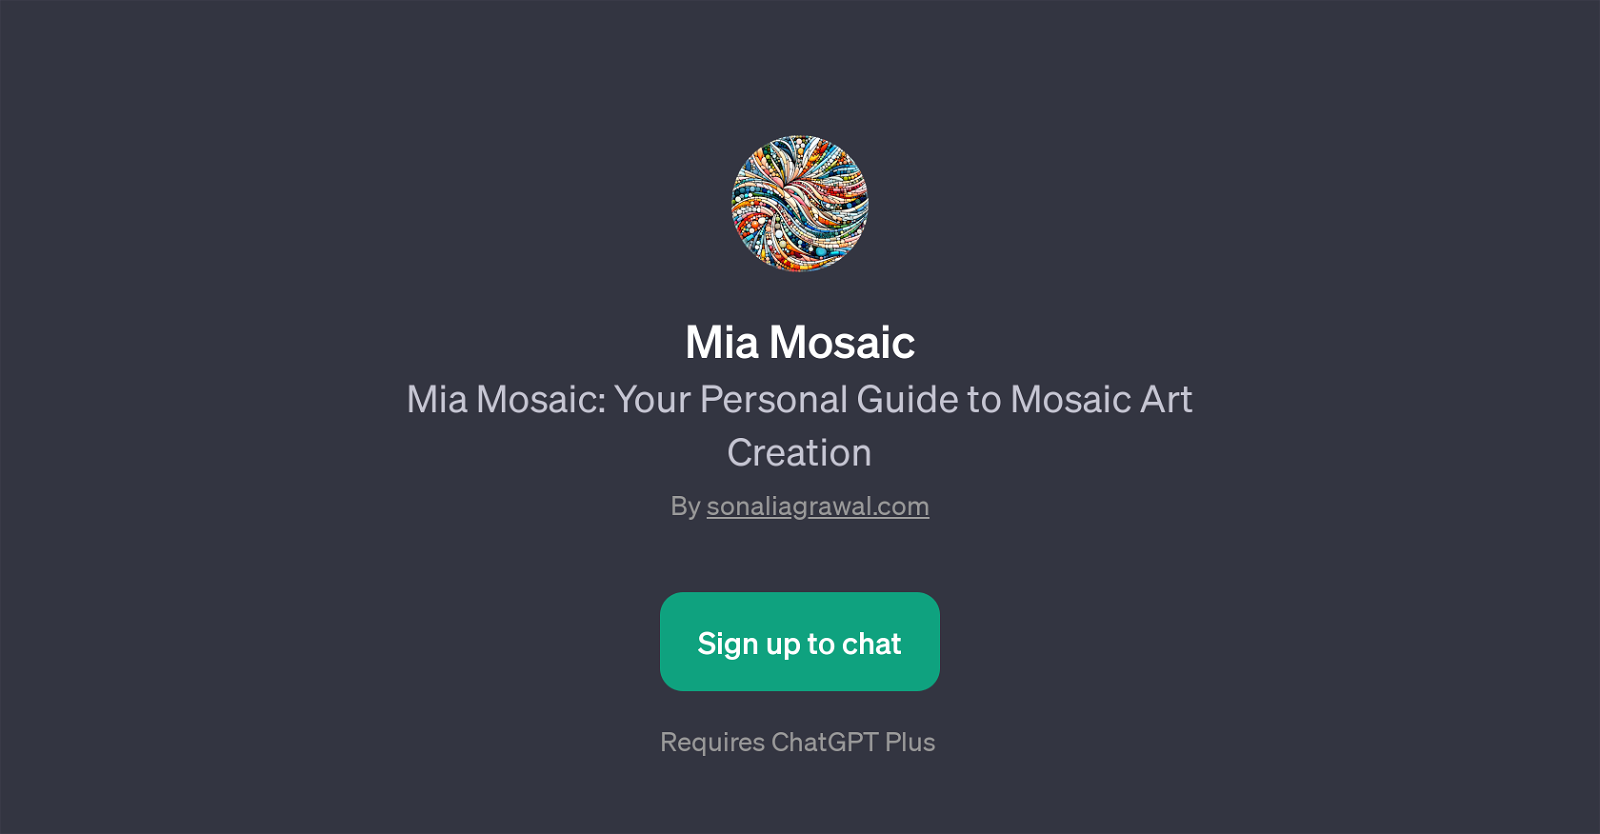 Mia Mosaic website